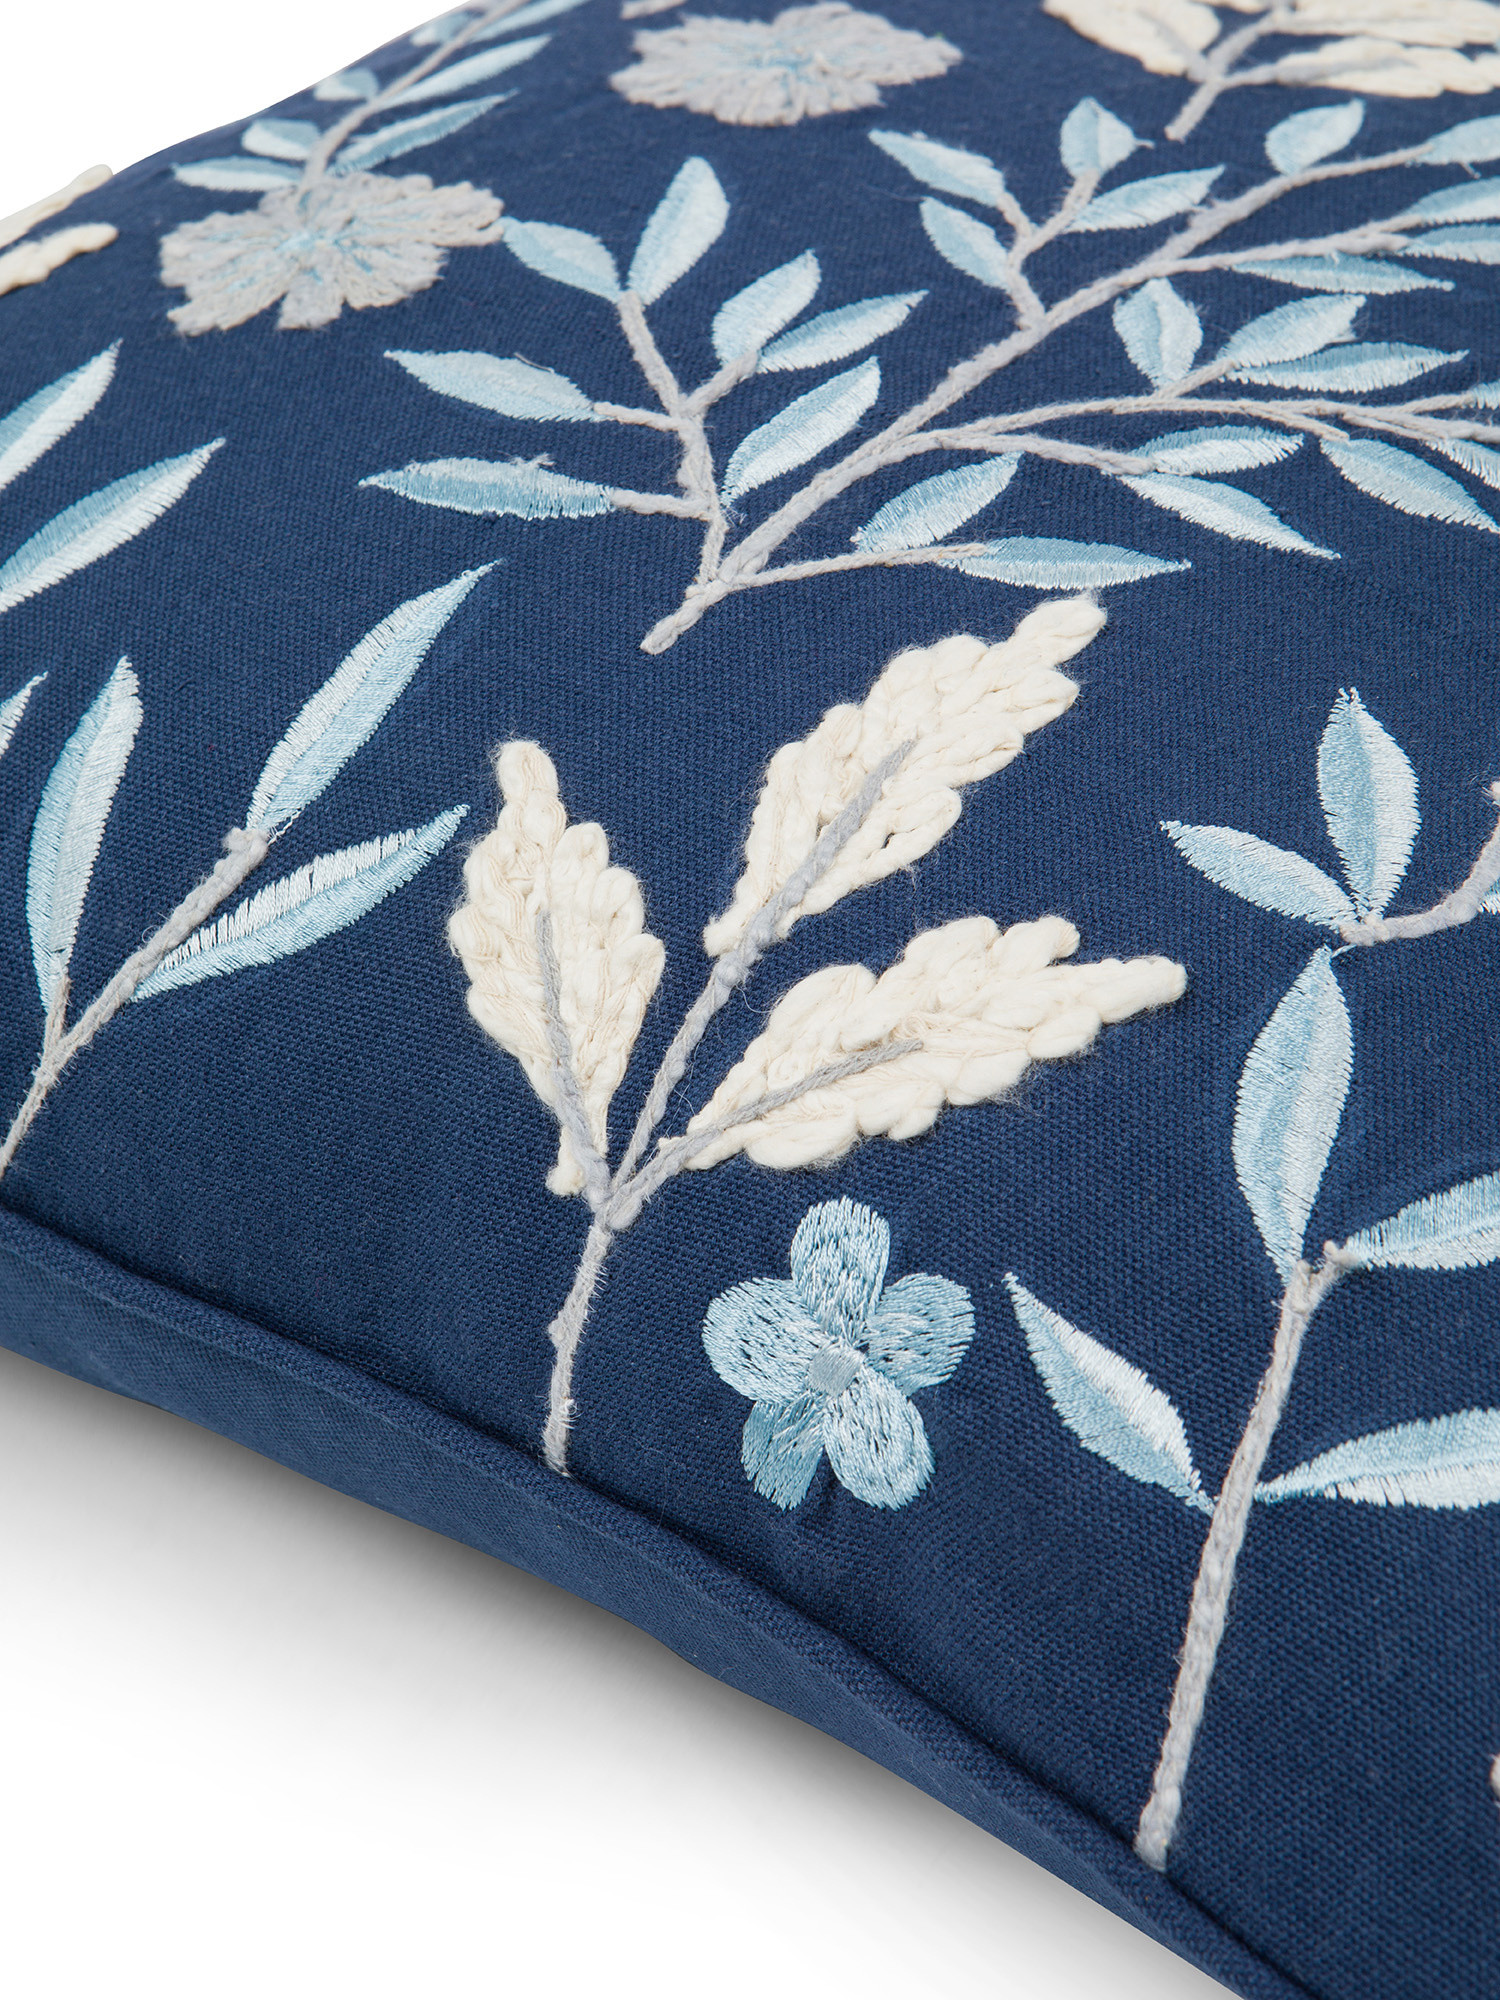 Cuscino ricamato fiori e foglie 45X45cm, Blu, large image number 2